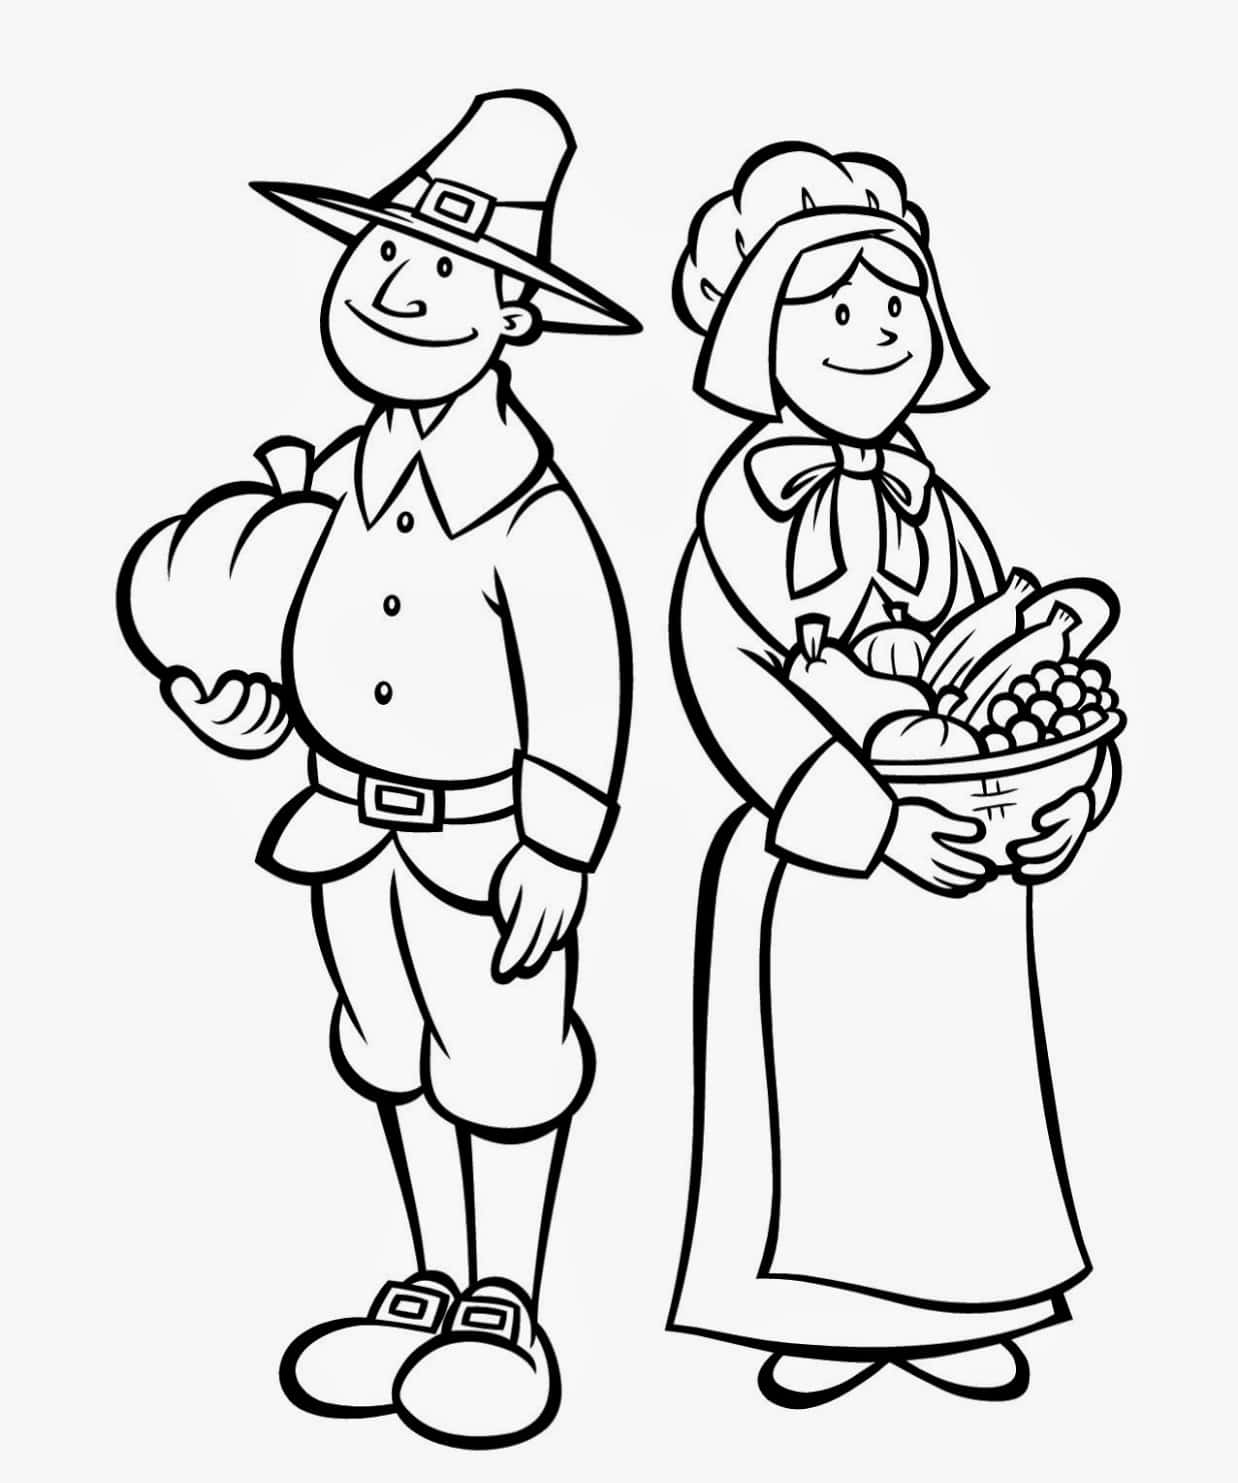 En par pilgrims i traditionel tøj